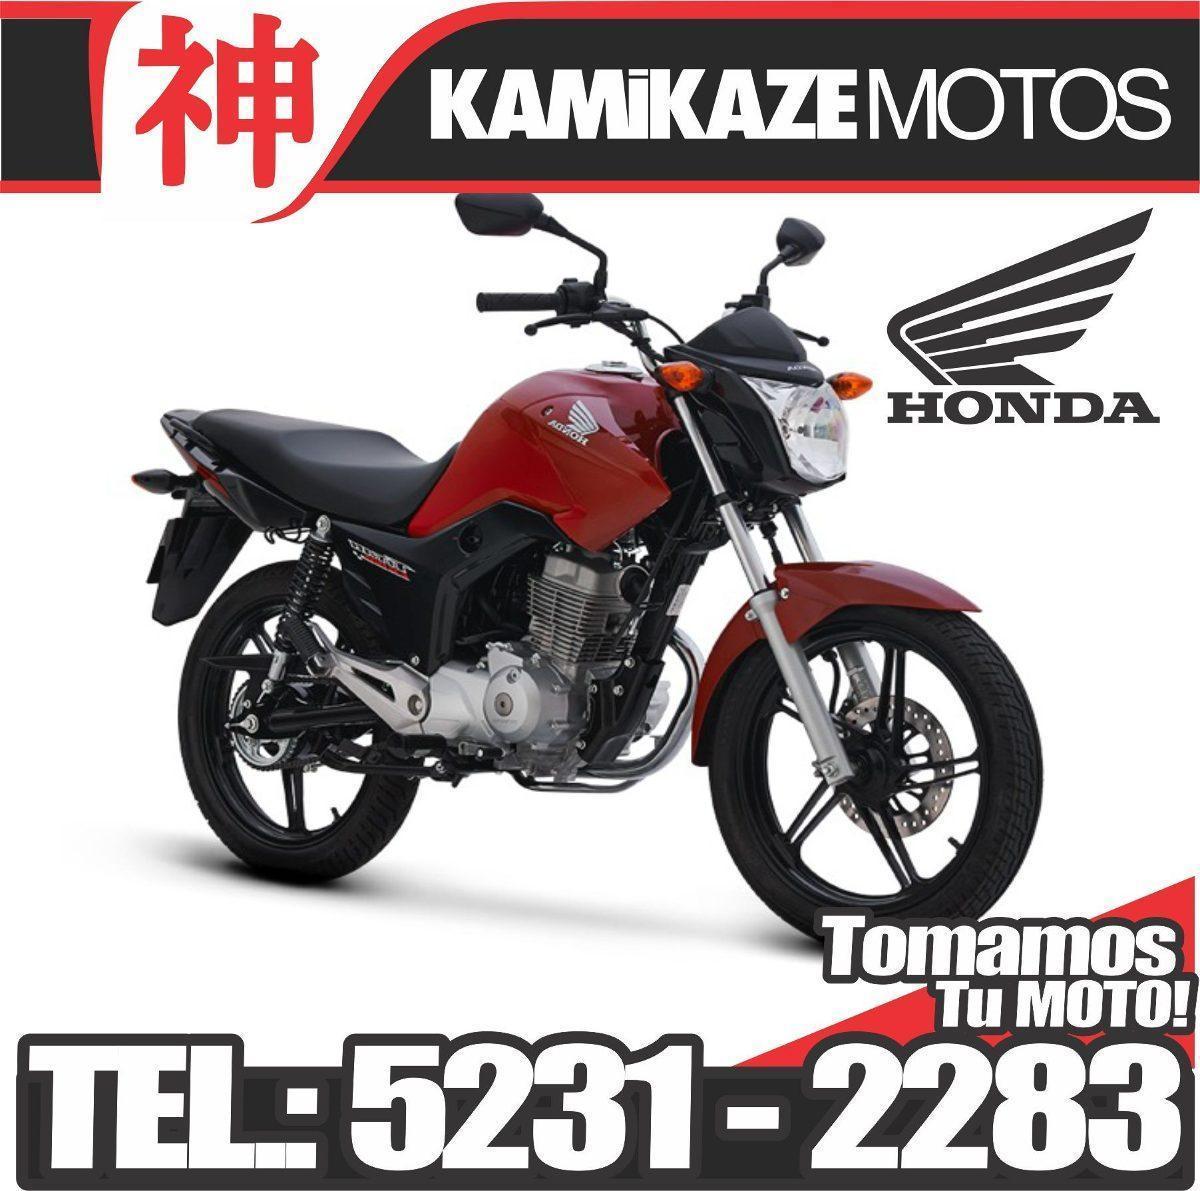 Honda New Cg Titan 150 - 0km - Tomo Moto - Financio (rouser)